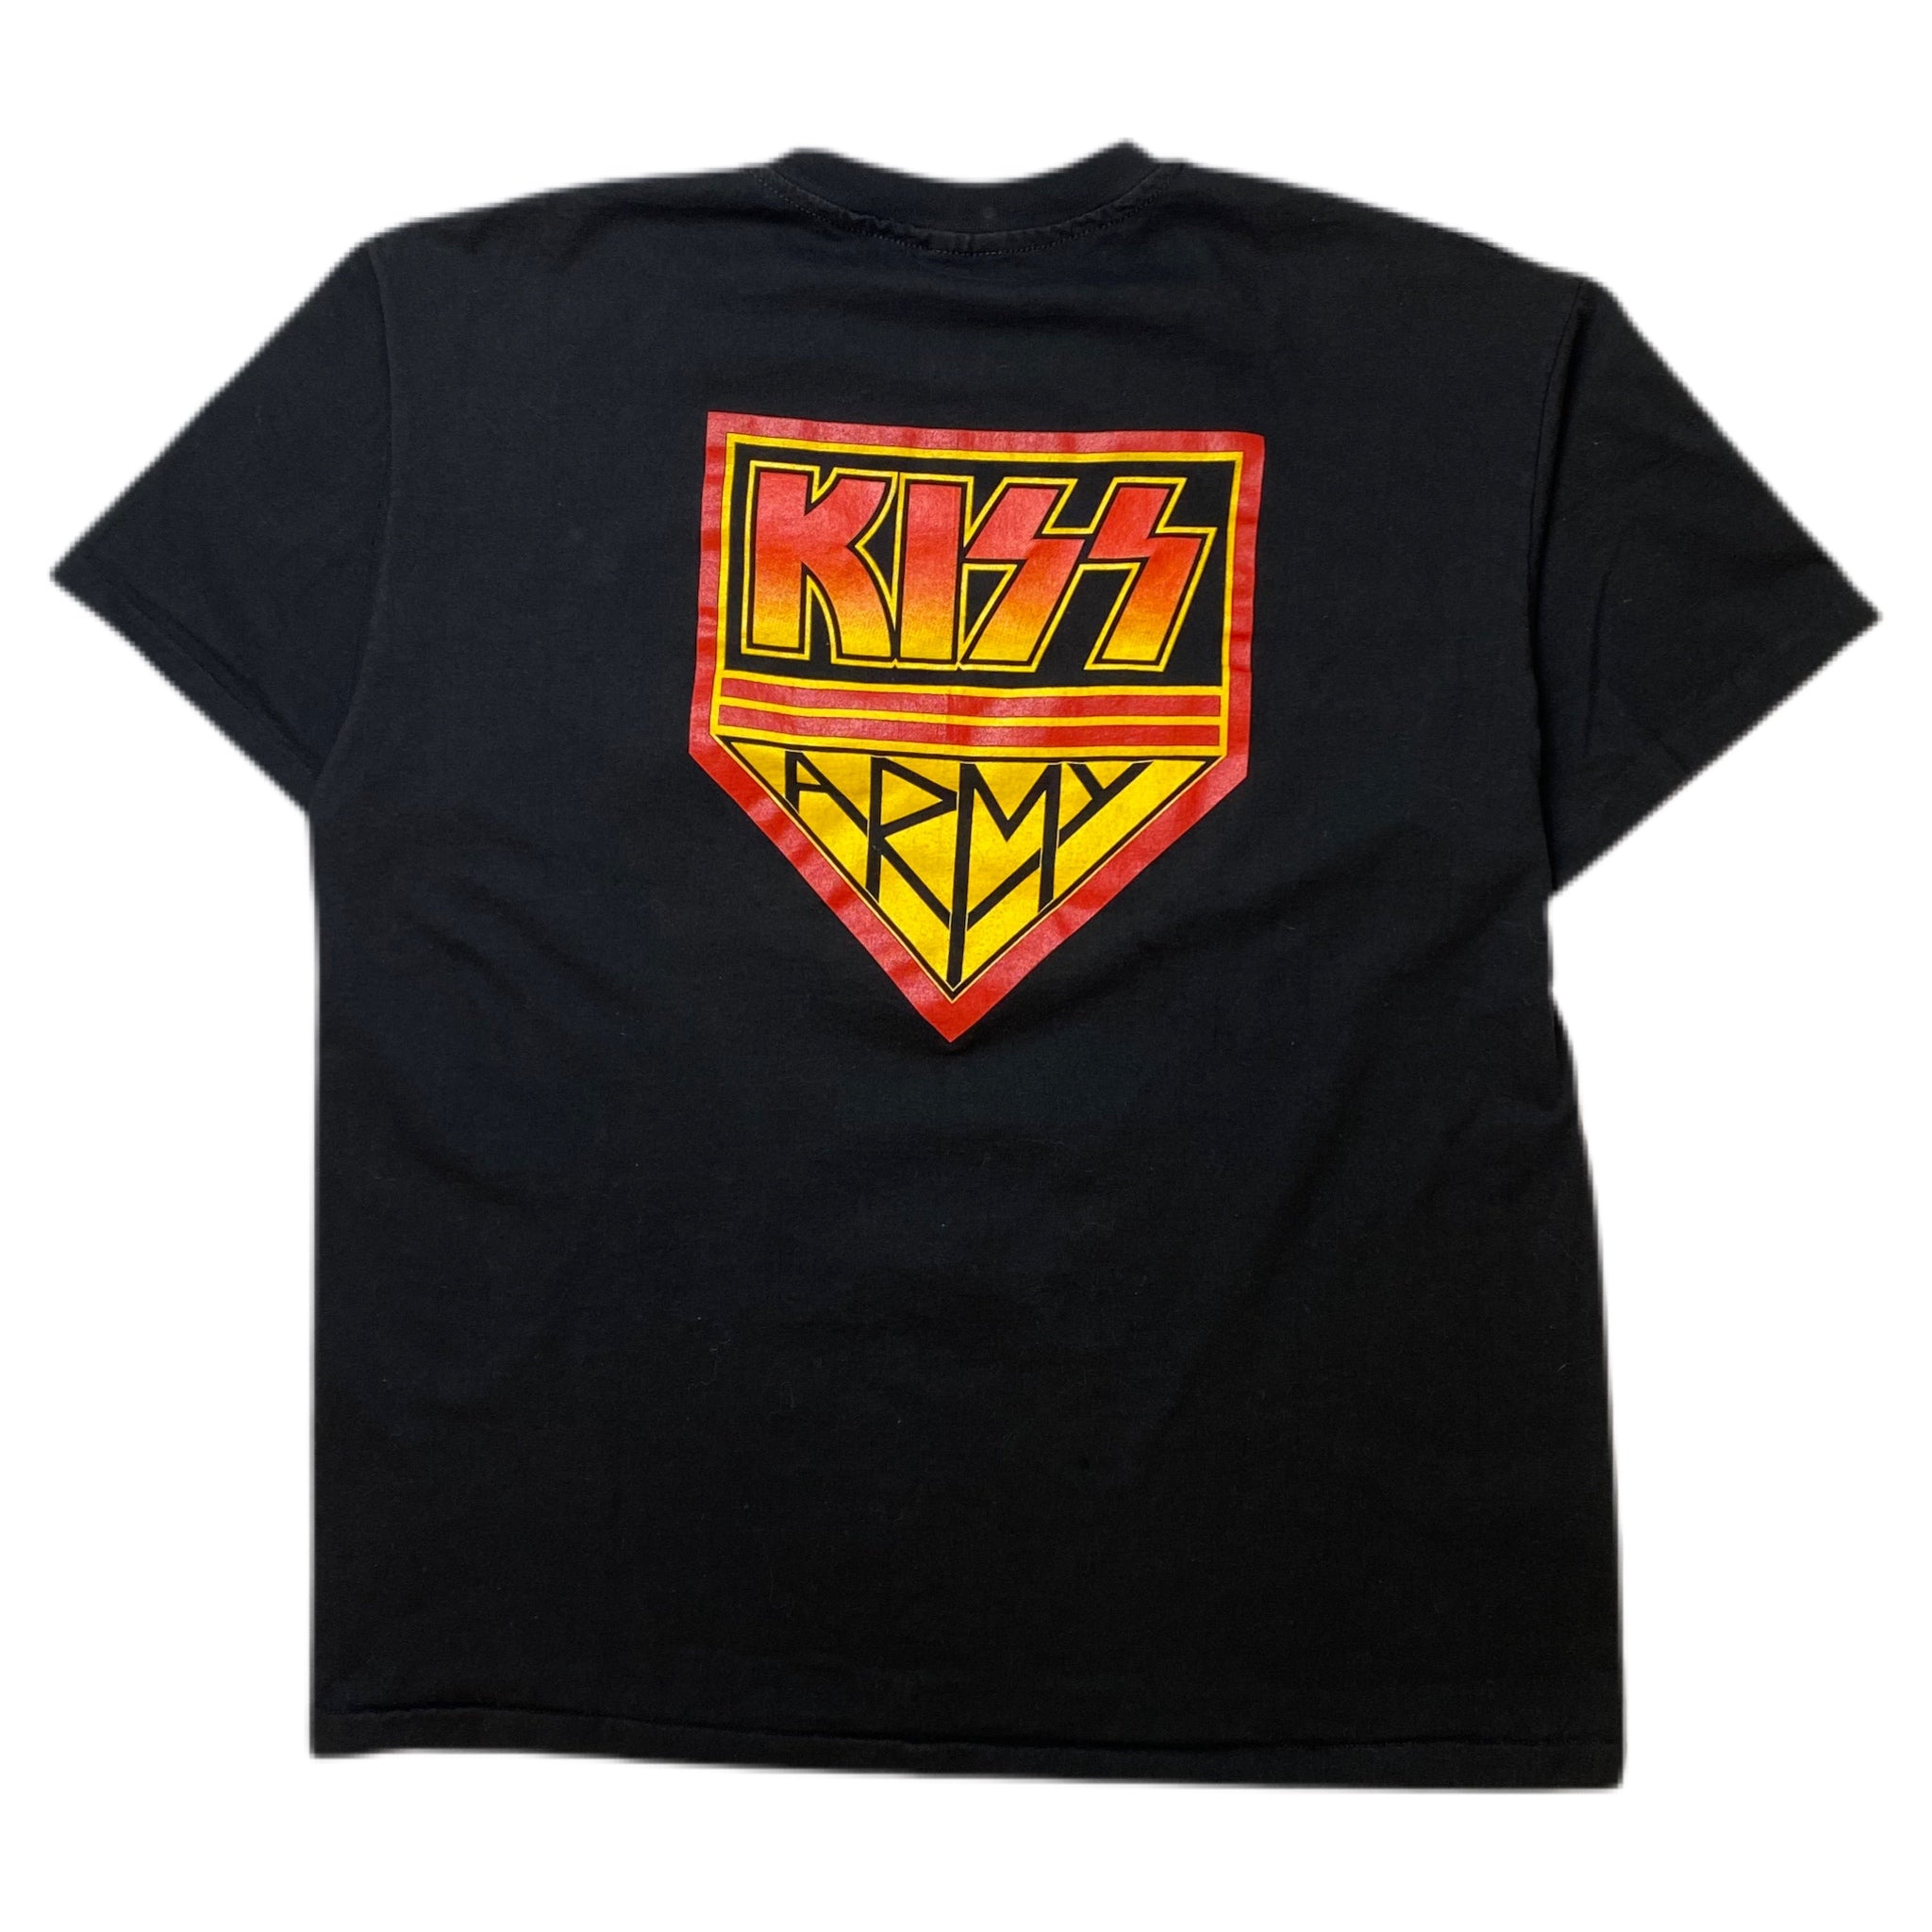 1993 KISS Alive 3 Tour Vintage Shirt - Black Shirt